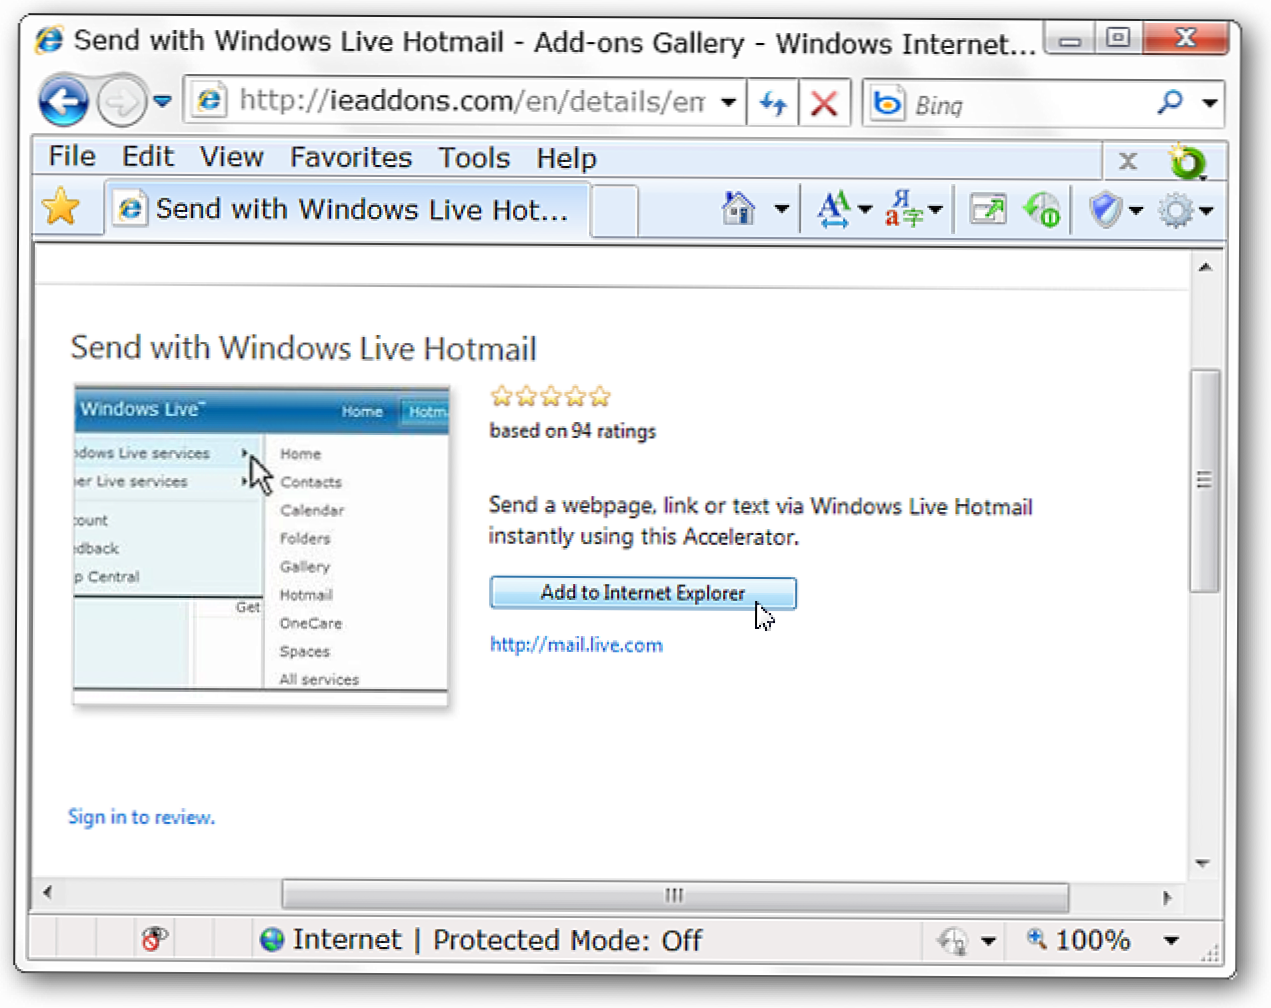 Kirim Teks dan Tautan melalui Windows Live Hotmail di IE 8 (Bagaimana caranya)